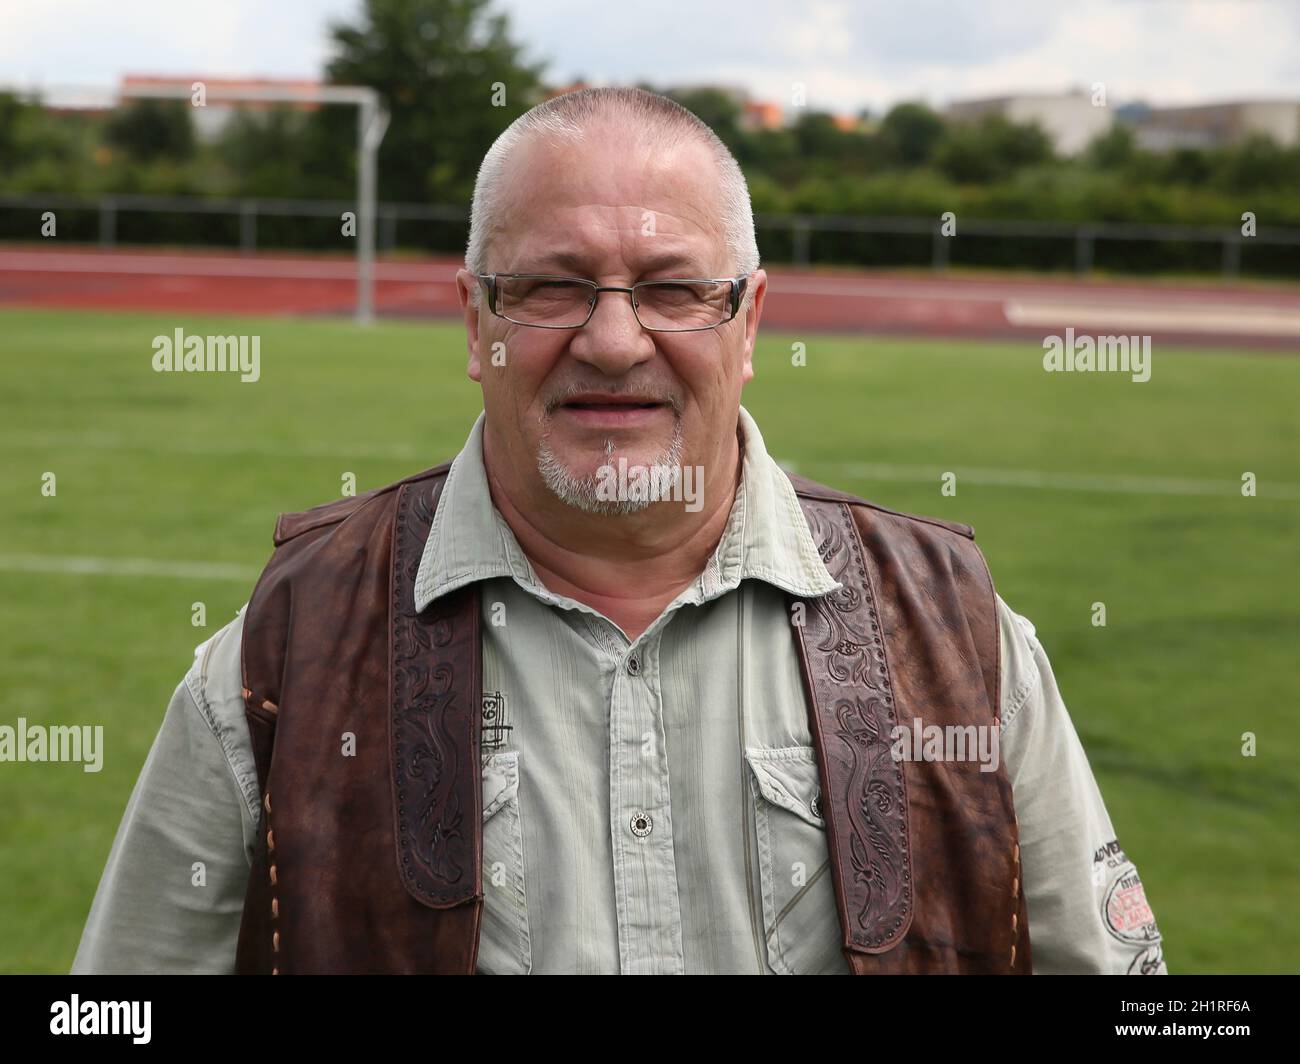 DDR Fußball-Nationalspieler und Legende Wolfgang Steinbach 1.FC Magdeburg Banque D'Images